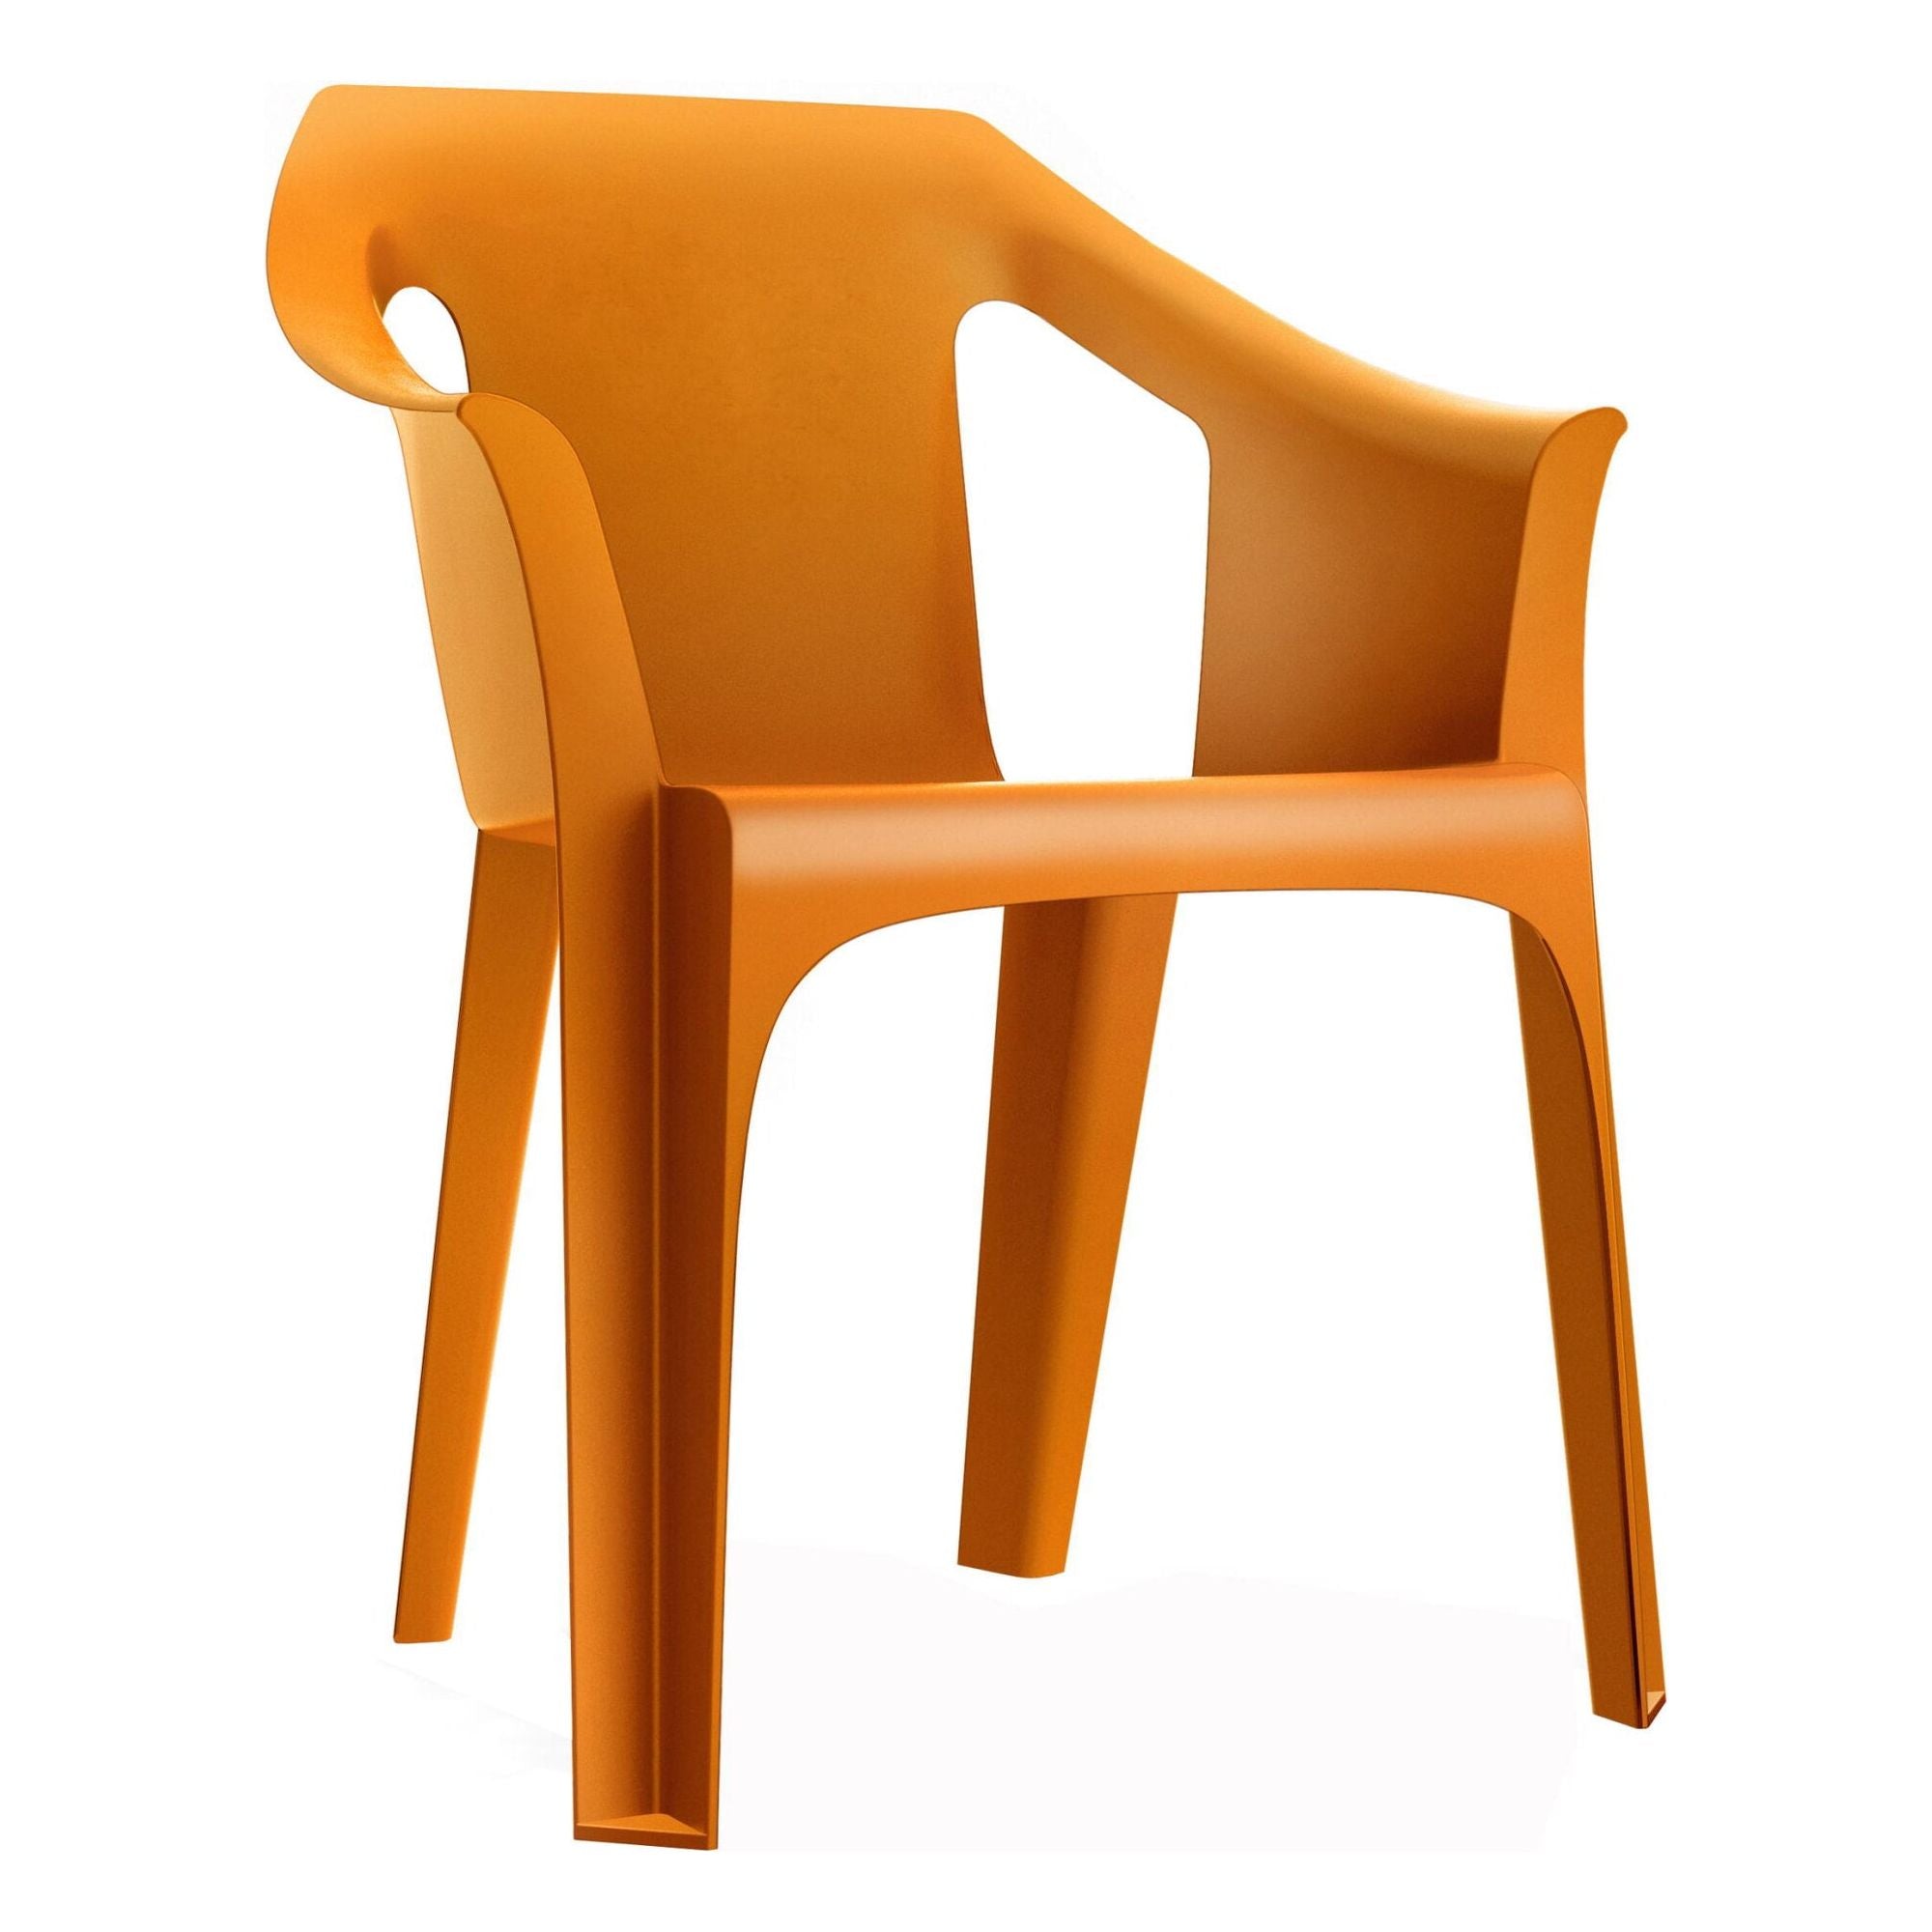 Garbar cool armchair outdoor orange